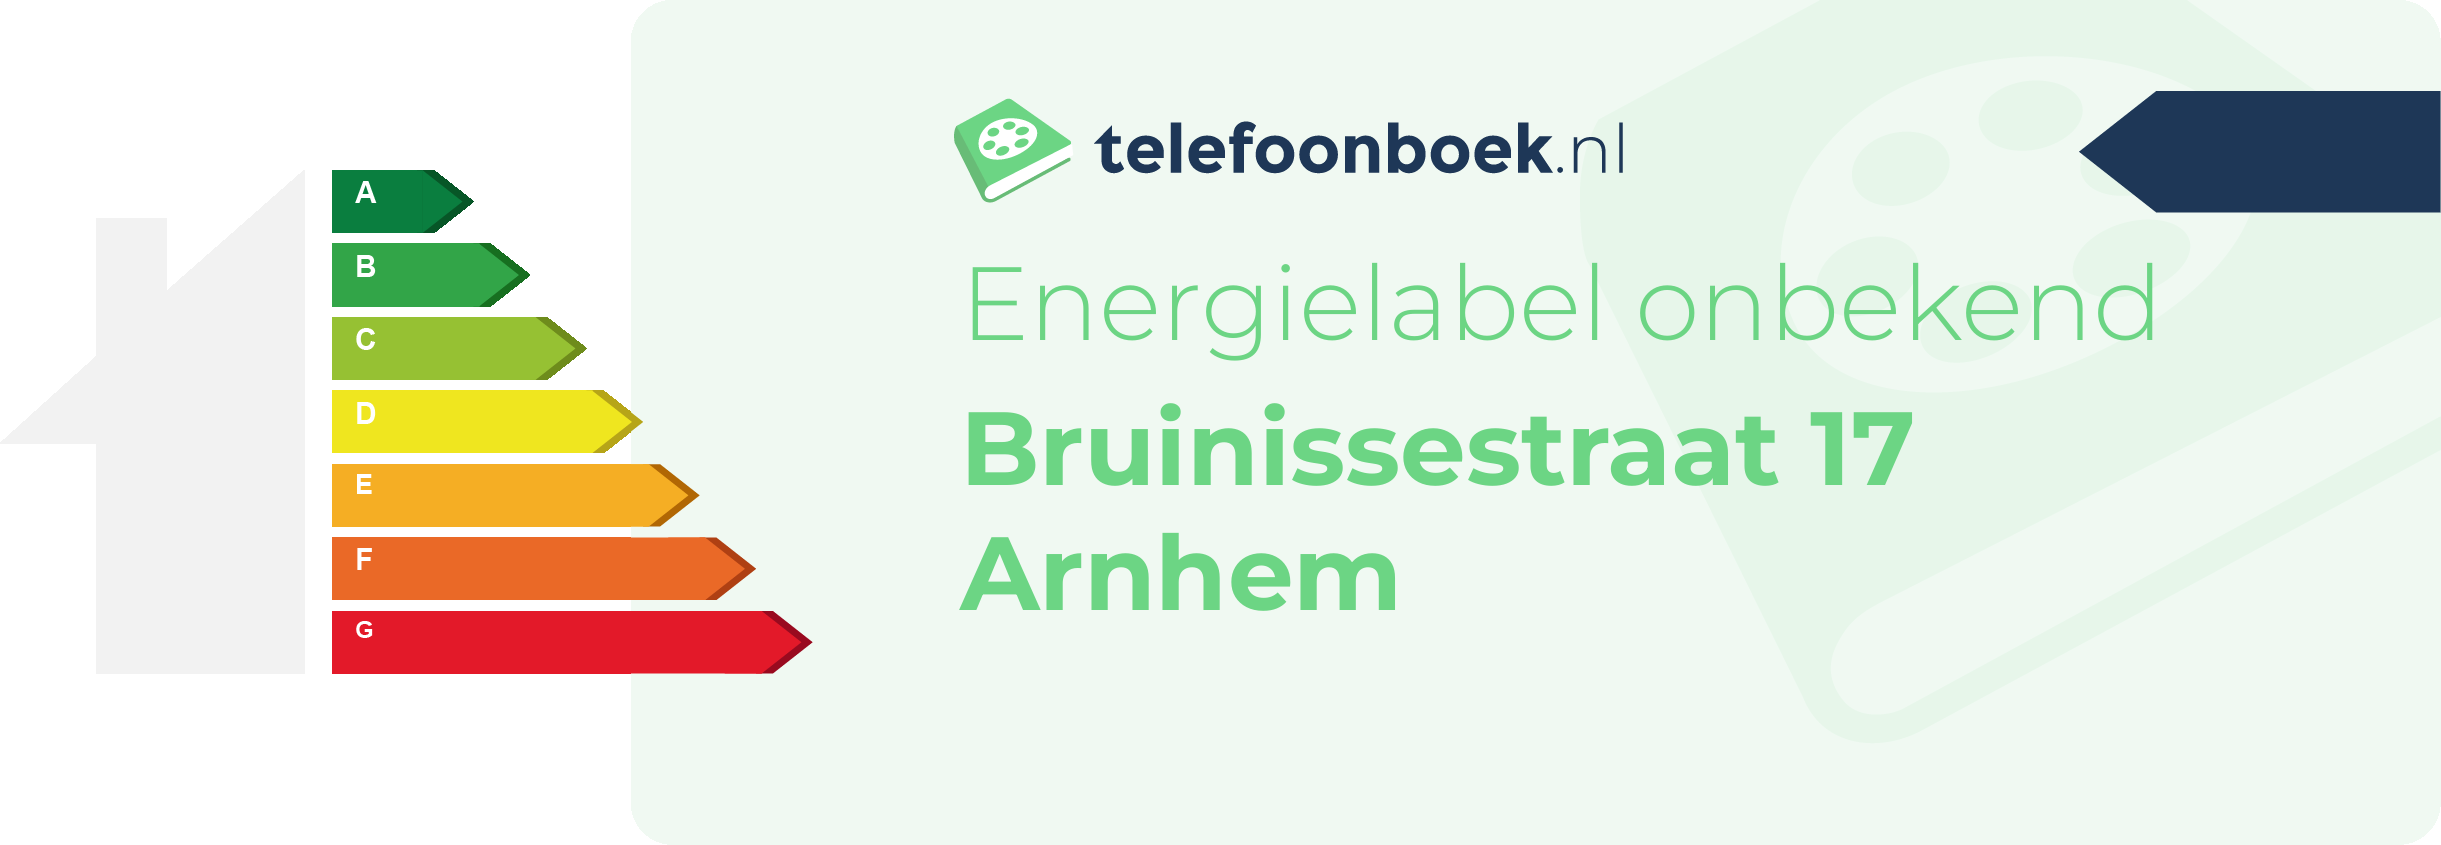 Energielabel Bruinissestraat 17 Arnhem